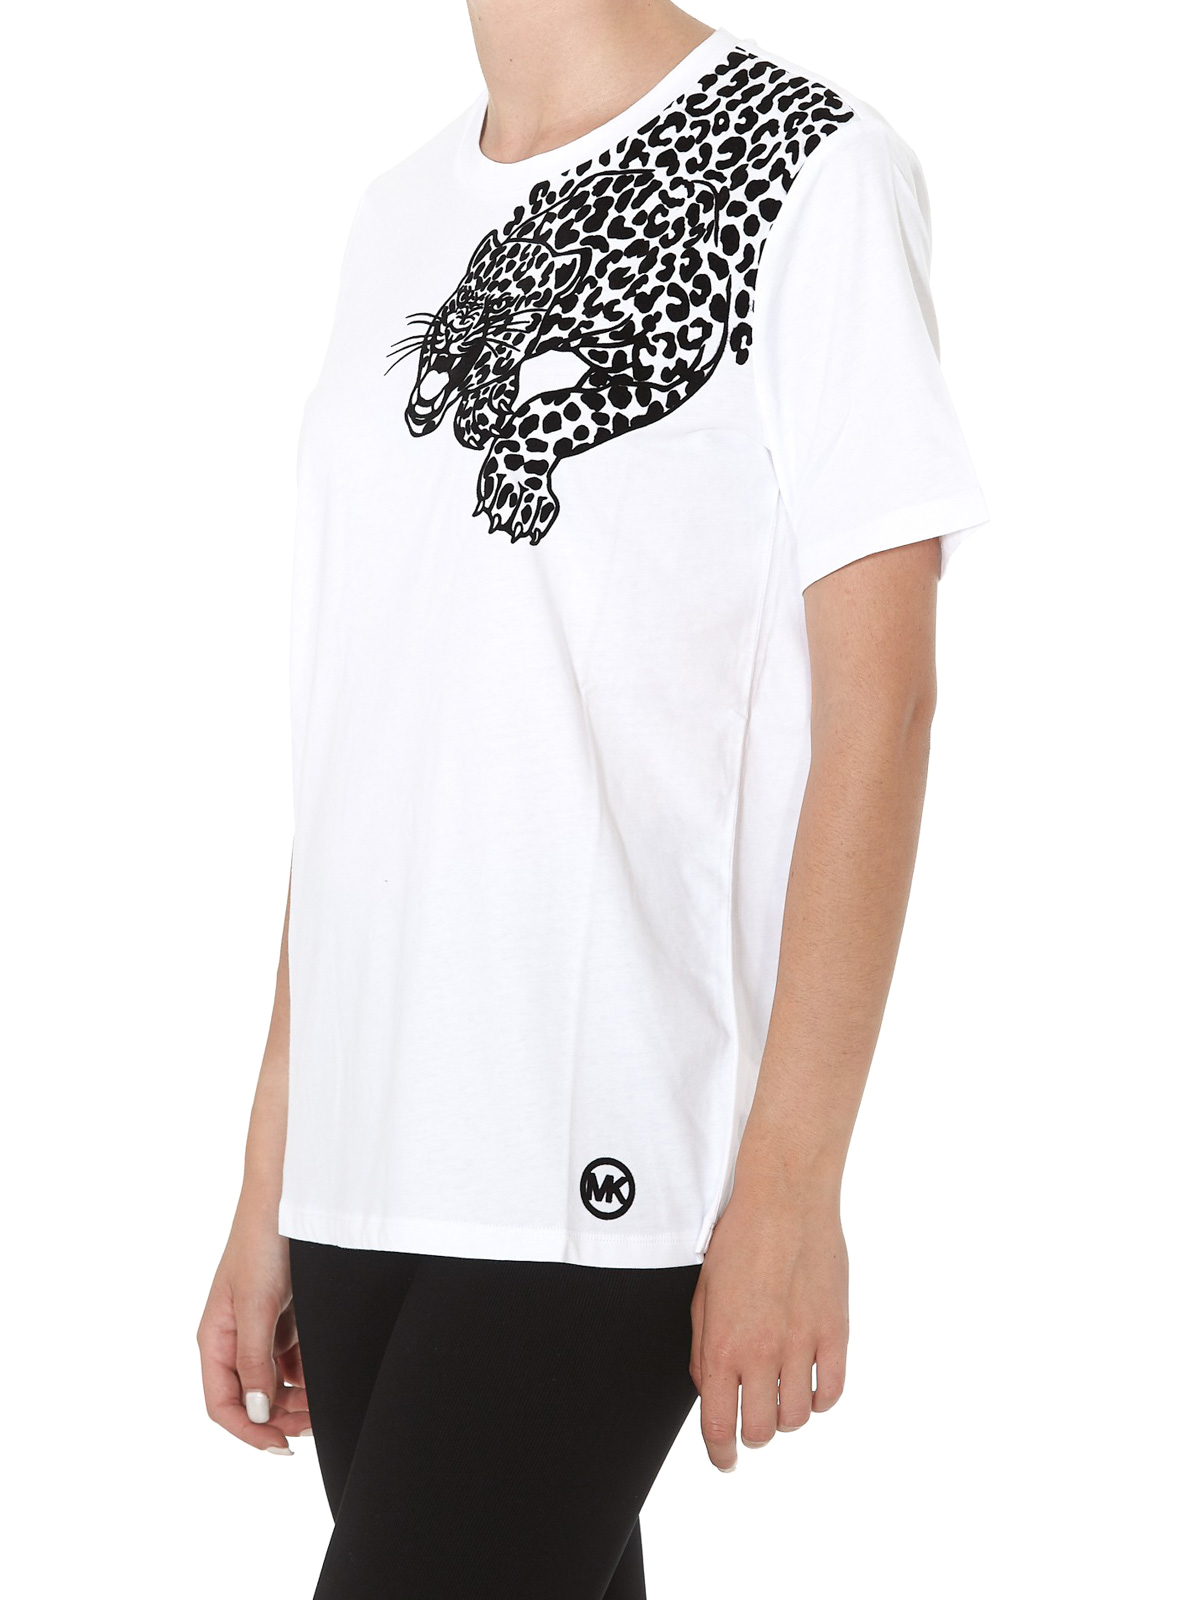 michael kors leopard print shirt